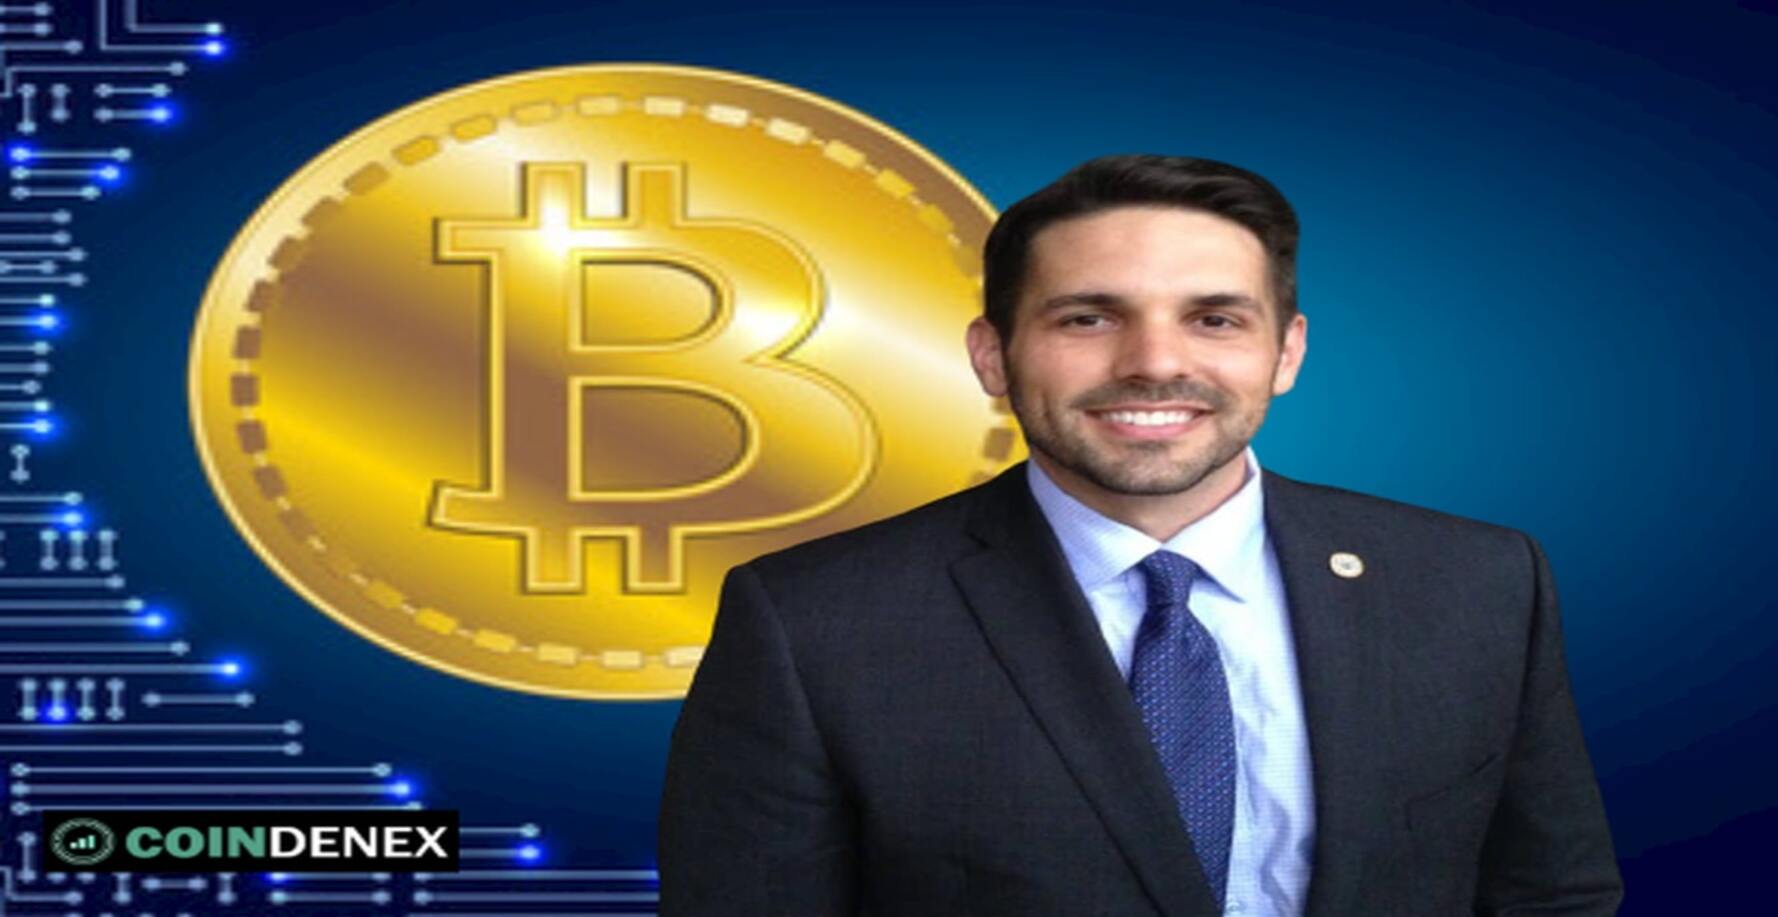 U.S Town Aims to Become Bitcoin Hub